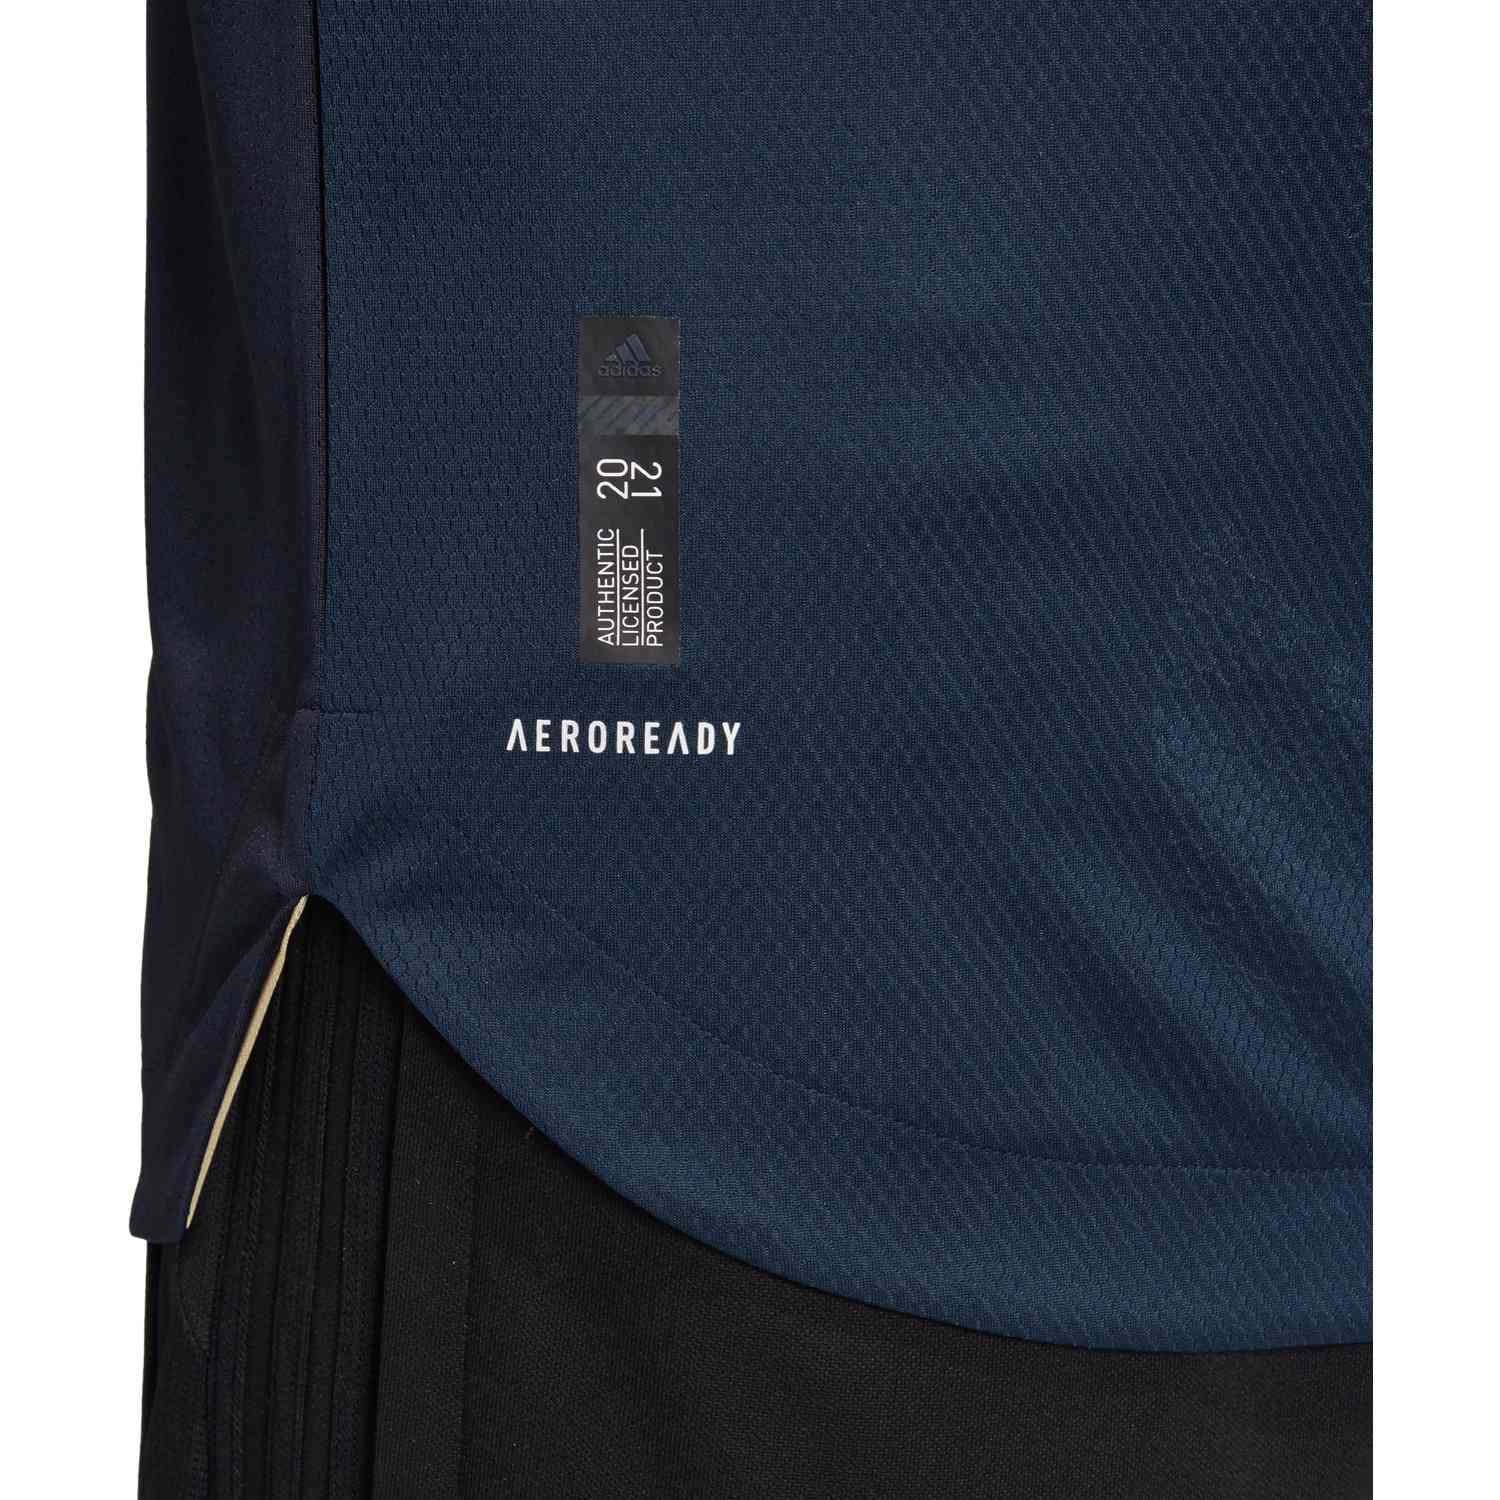 Philadelphia Union 2015 Starry White Secondary Kit, by adidas - Pursuit  Of Dopeness